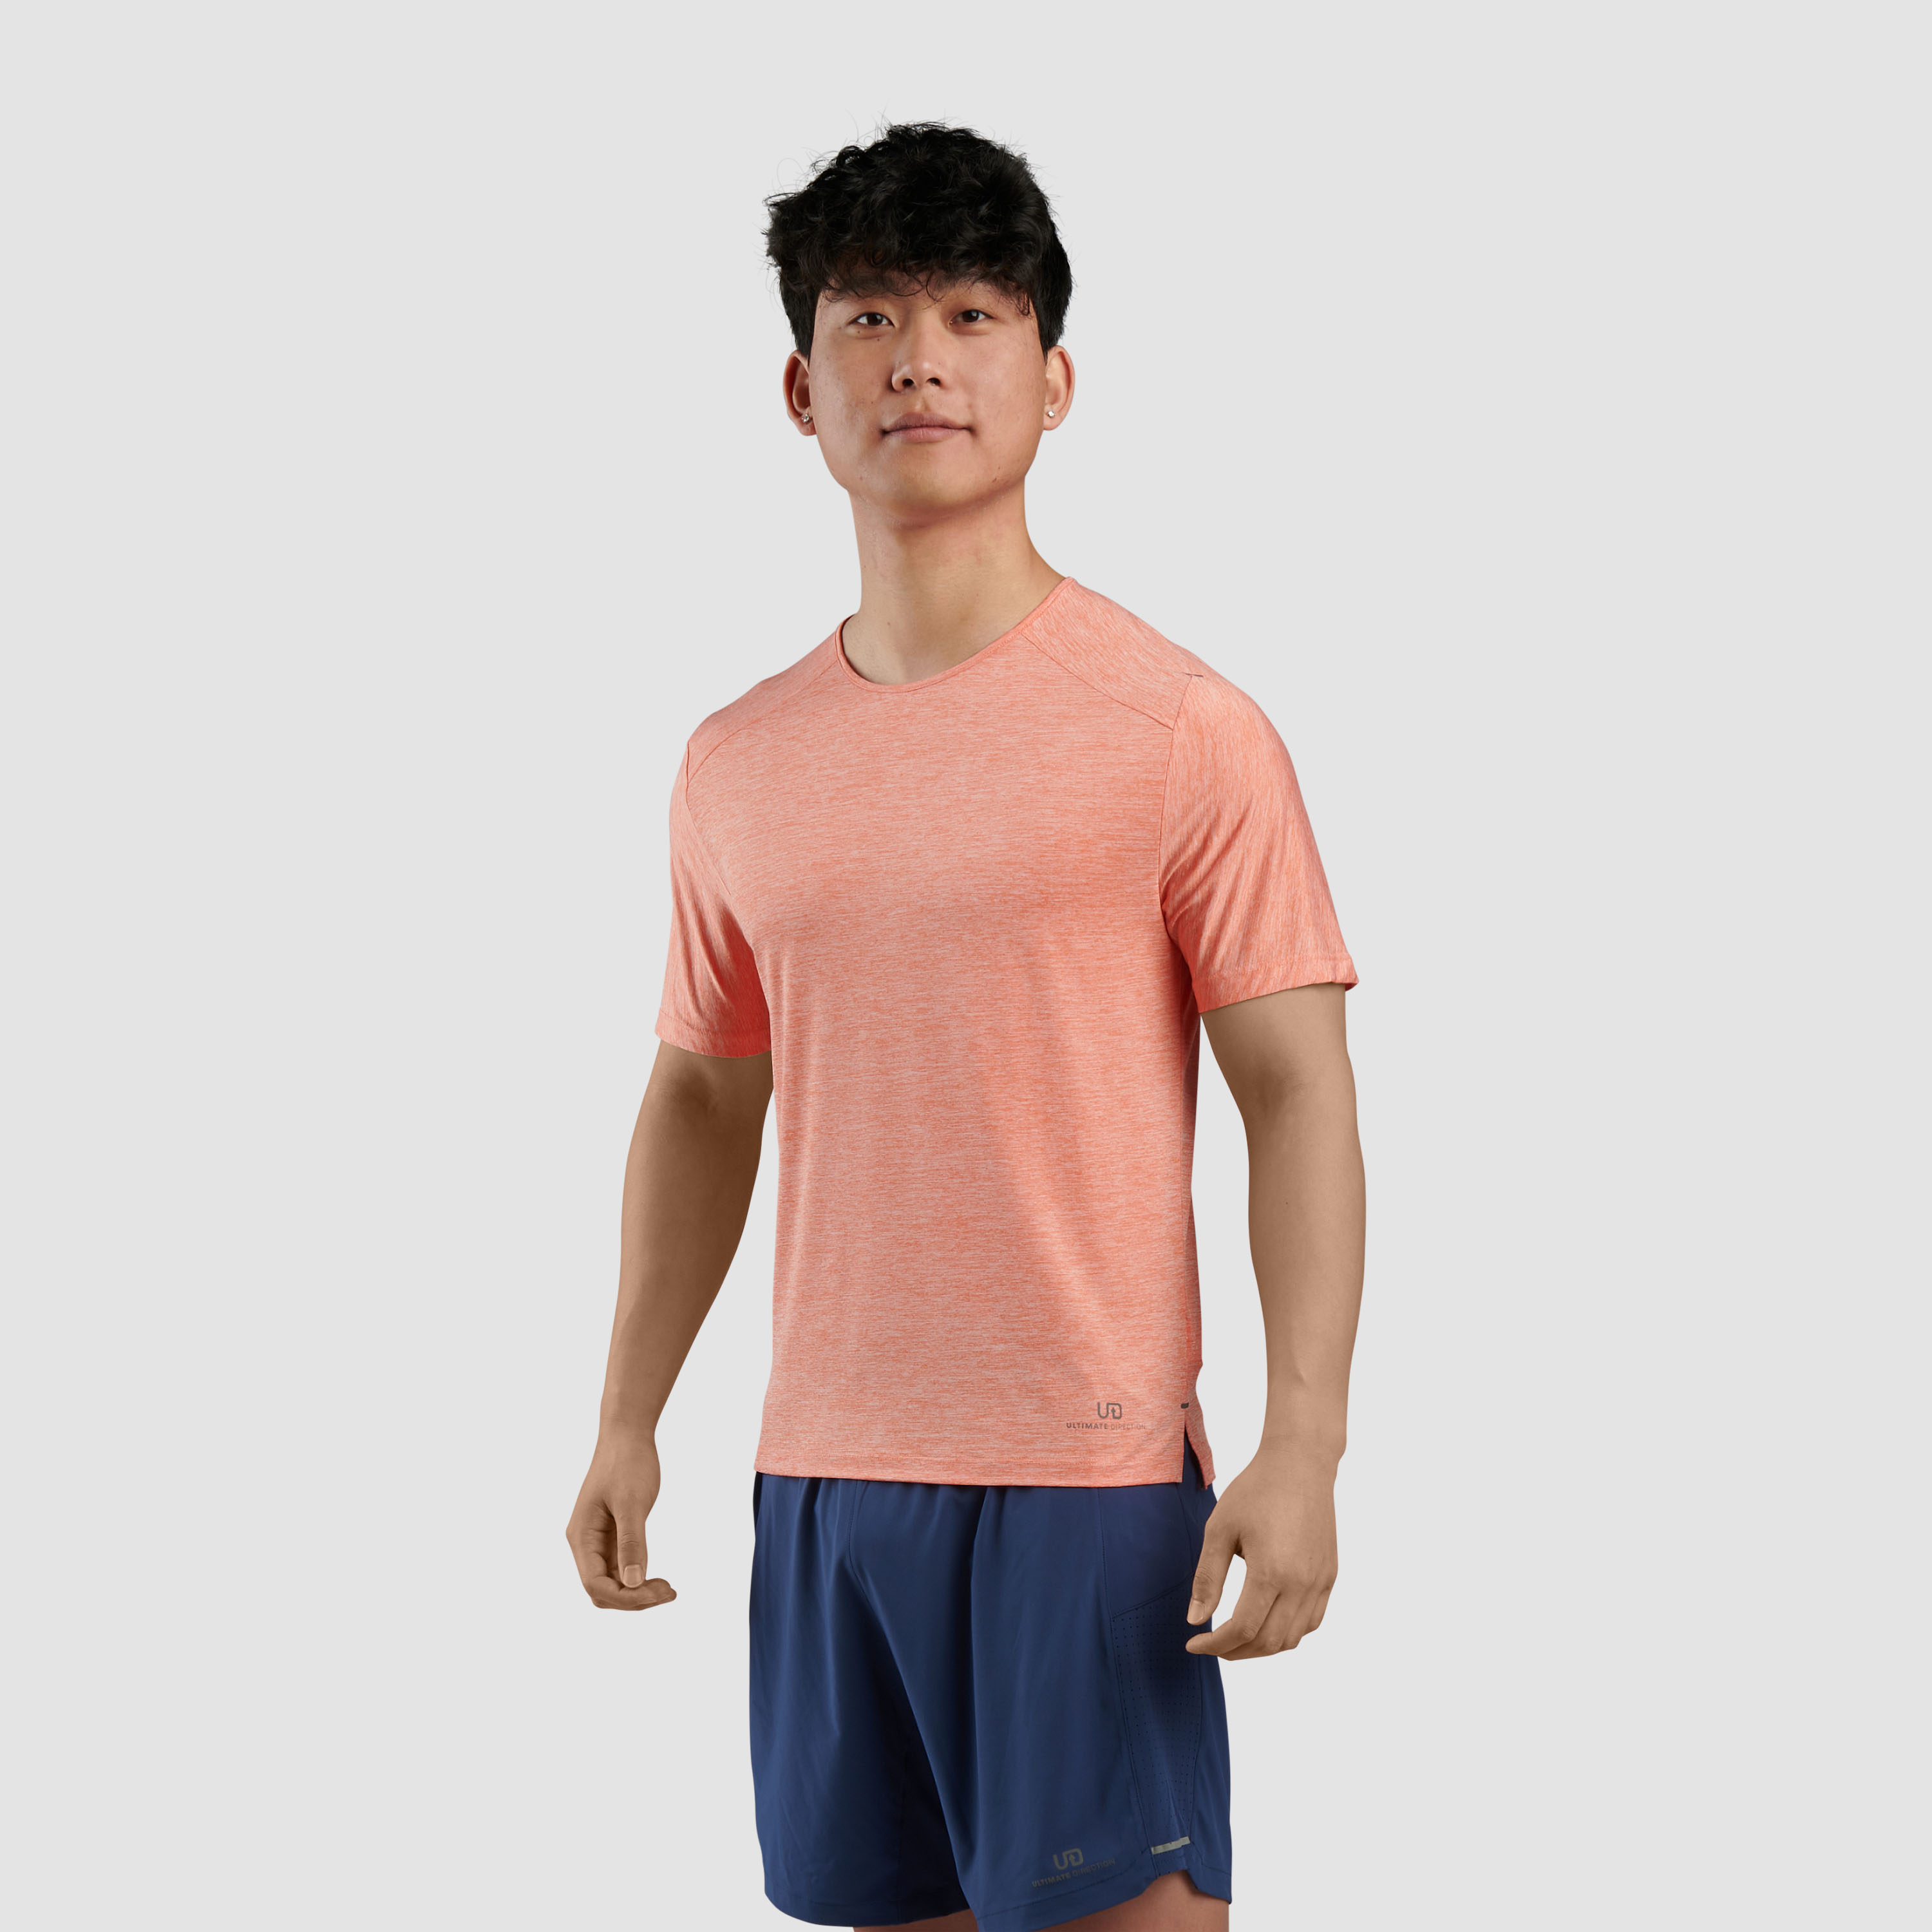 Ultimate Direction Men's Cirriform T-Shirt in Zion Size XL